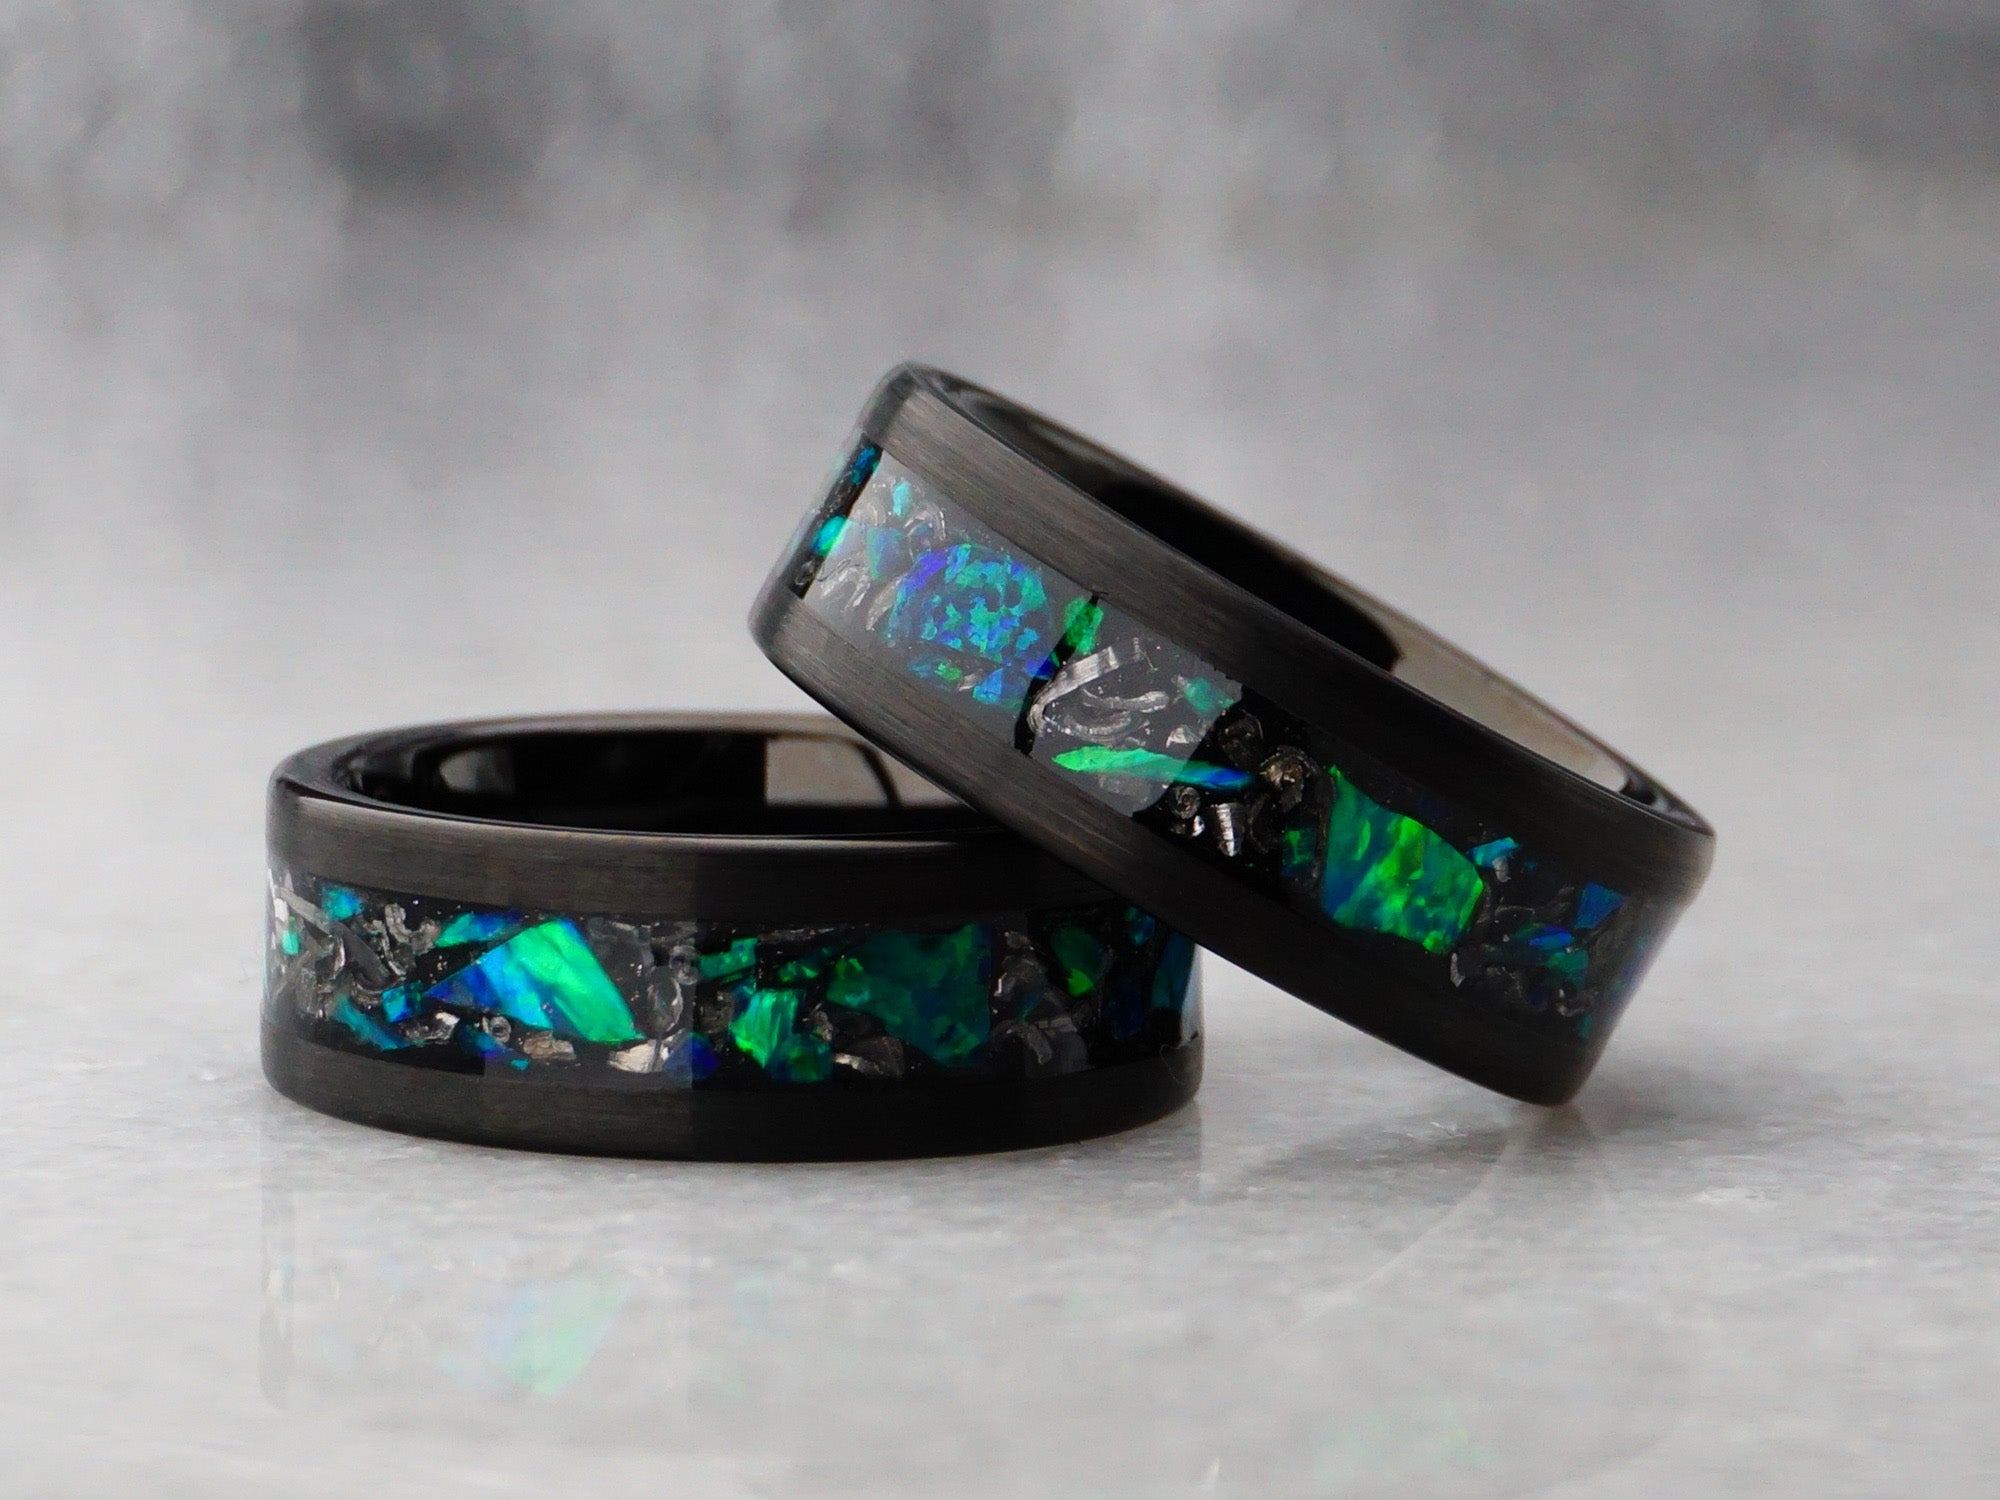 8mm eagle nebula ring, brushed black tungsten ring with green blue opal and meteorite metal inlay, modern mens wedding ring.jpg